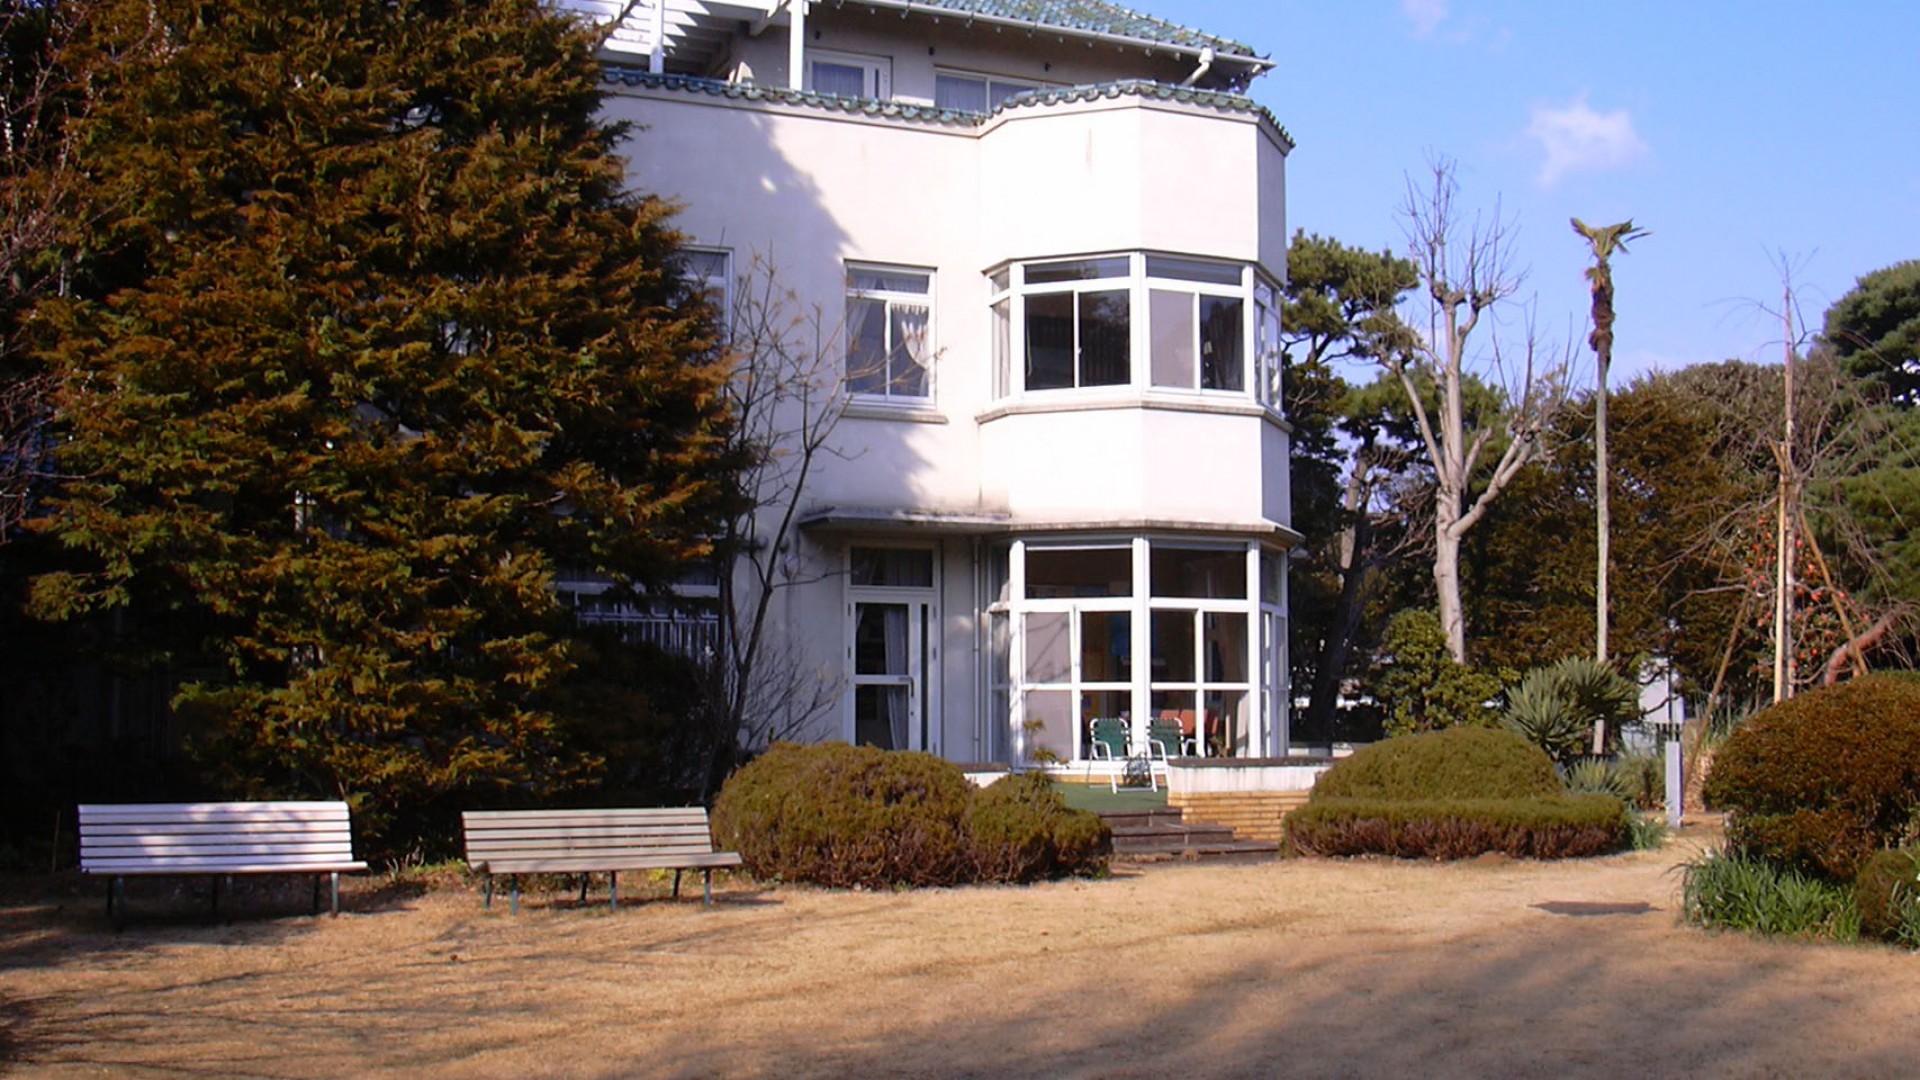 Odawara Literature Museum